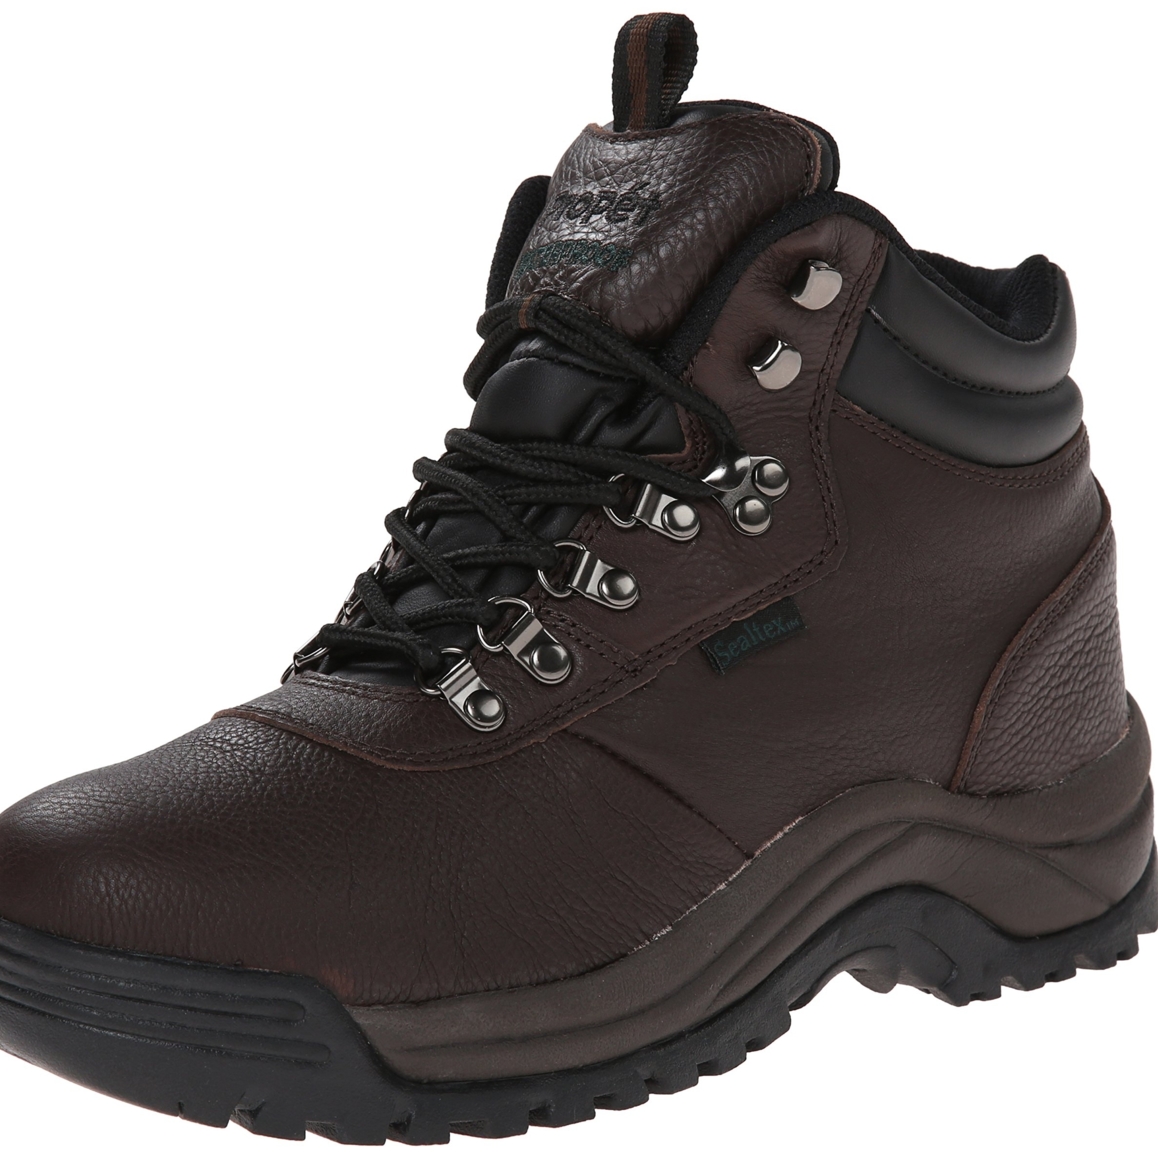 Propet Men's Cliff Walker Hiking Boot Bronco Brown - M3188BRO - BRONCO BROWN, 10-4E